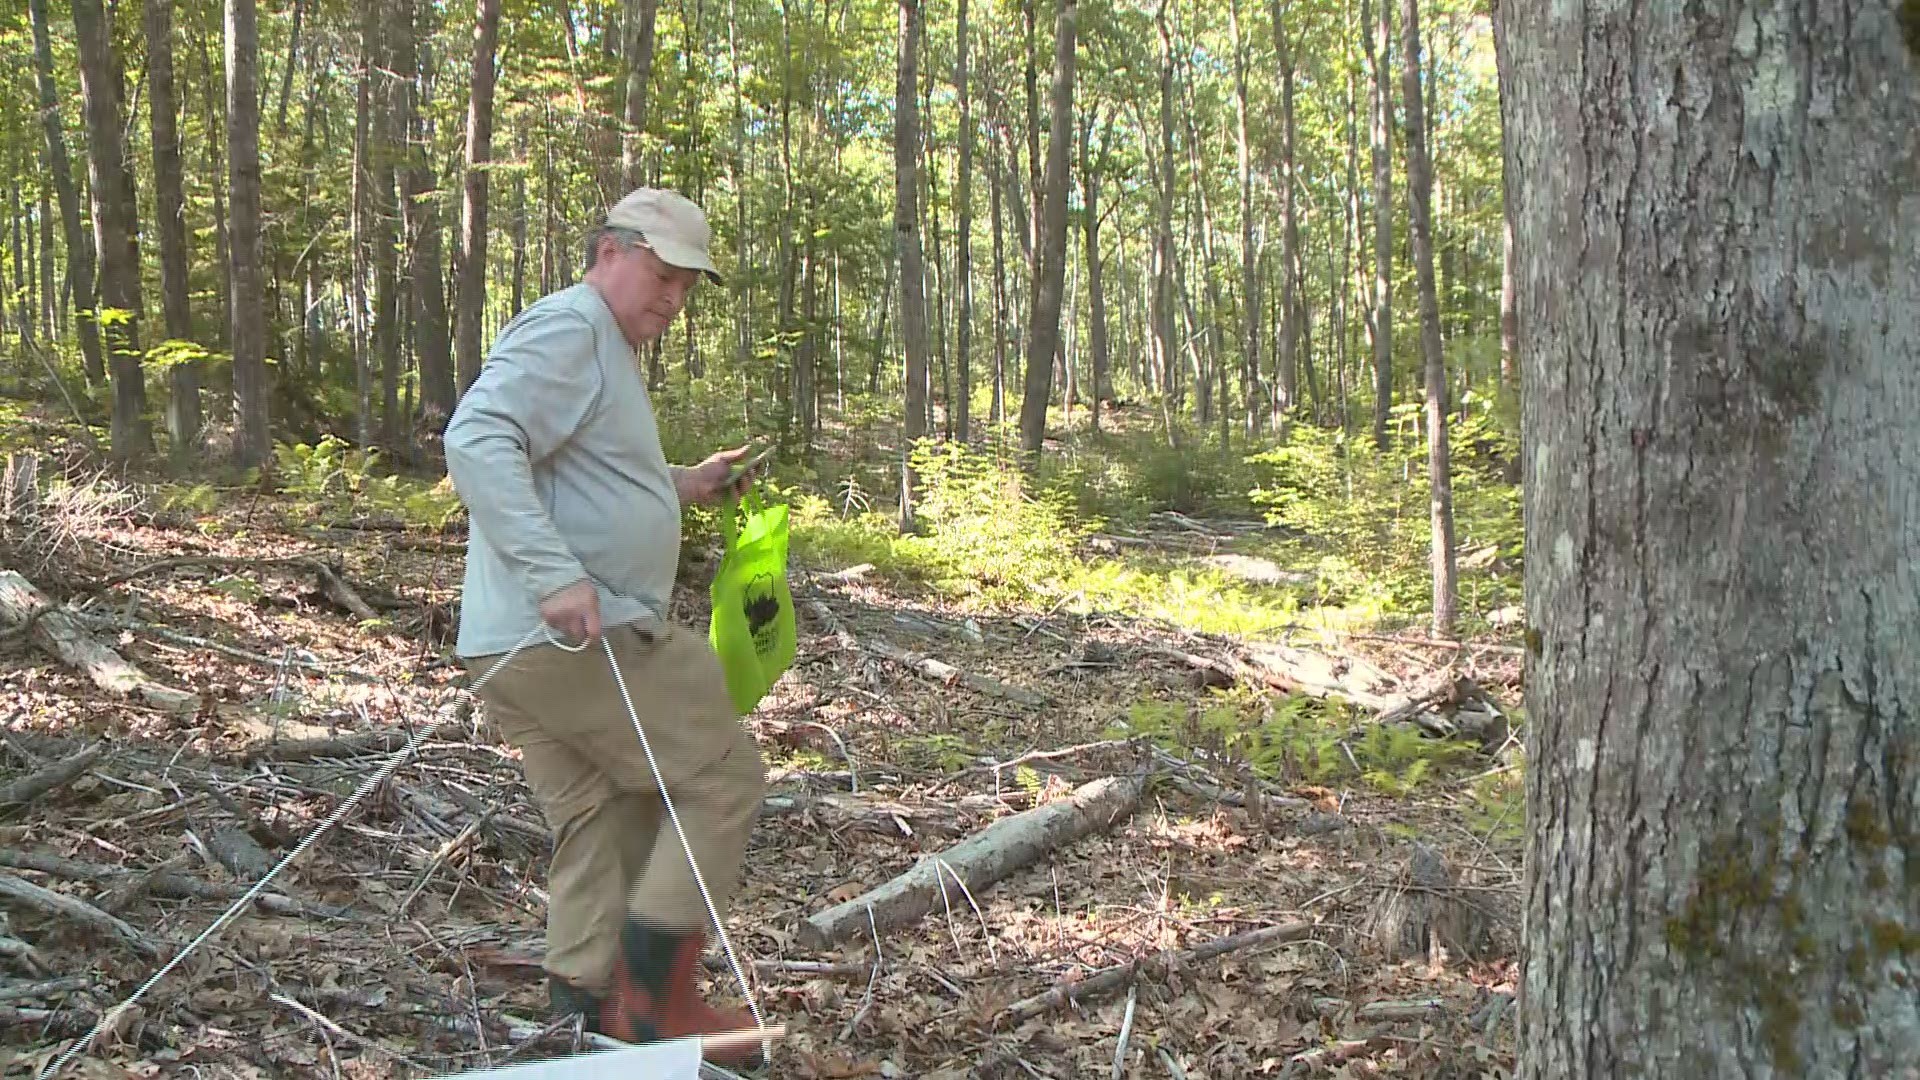 Gordon Johnson Citizen Scientist, Maine Forest Tick Survey Volunteer, searching the Maine woods for ticks